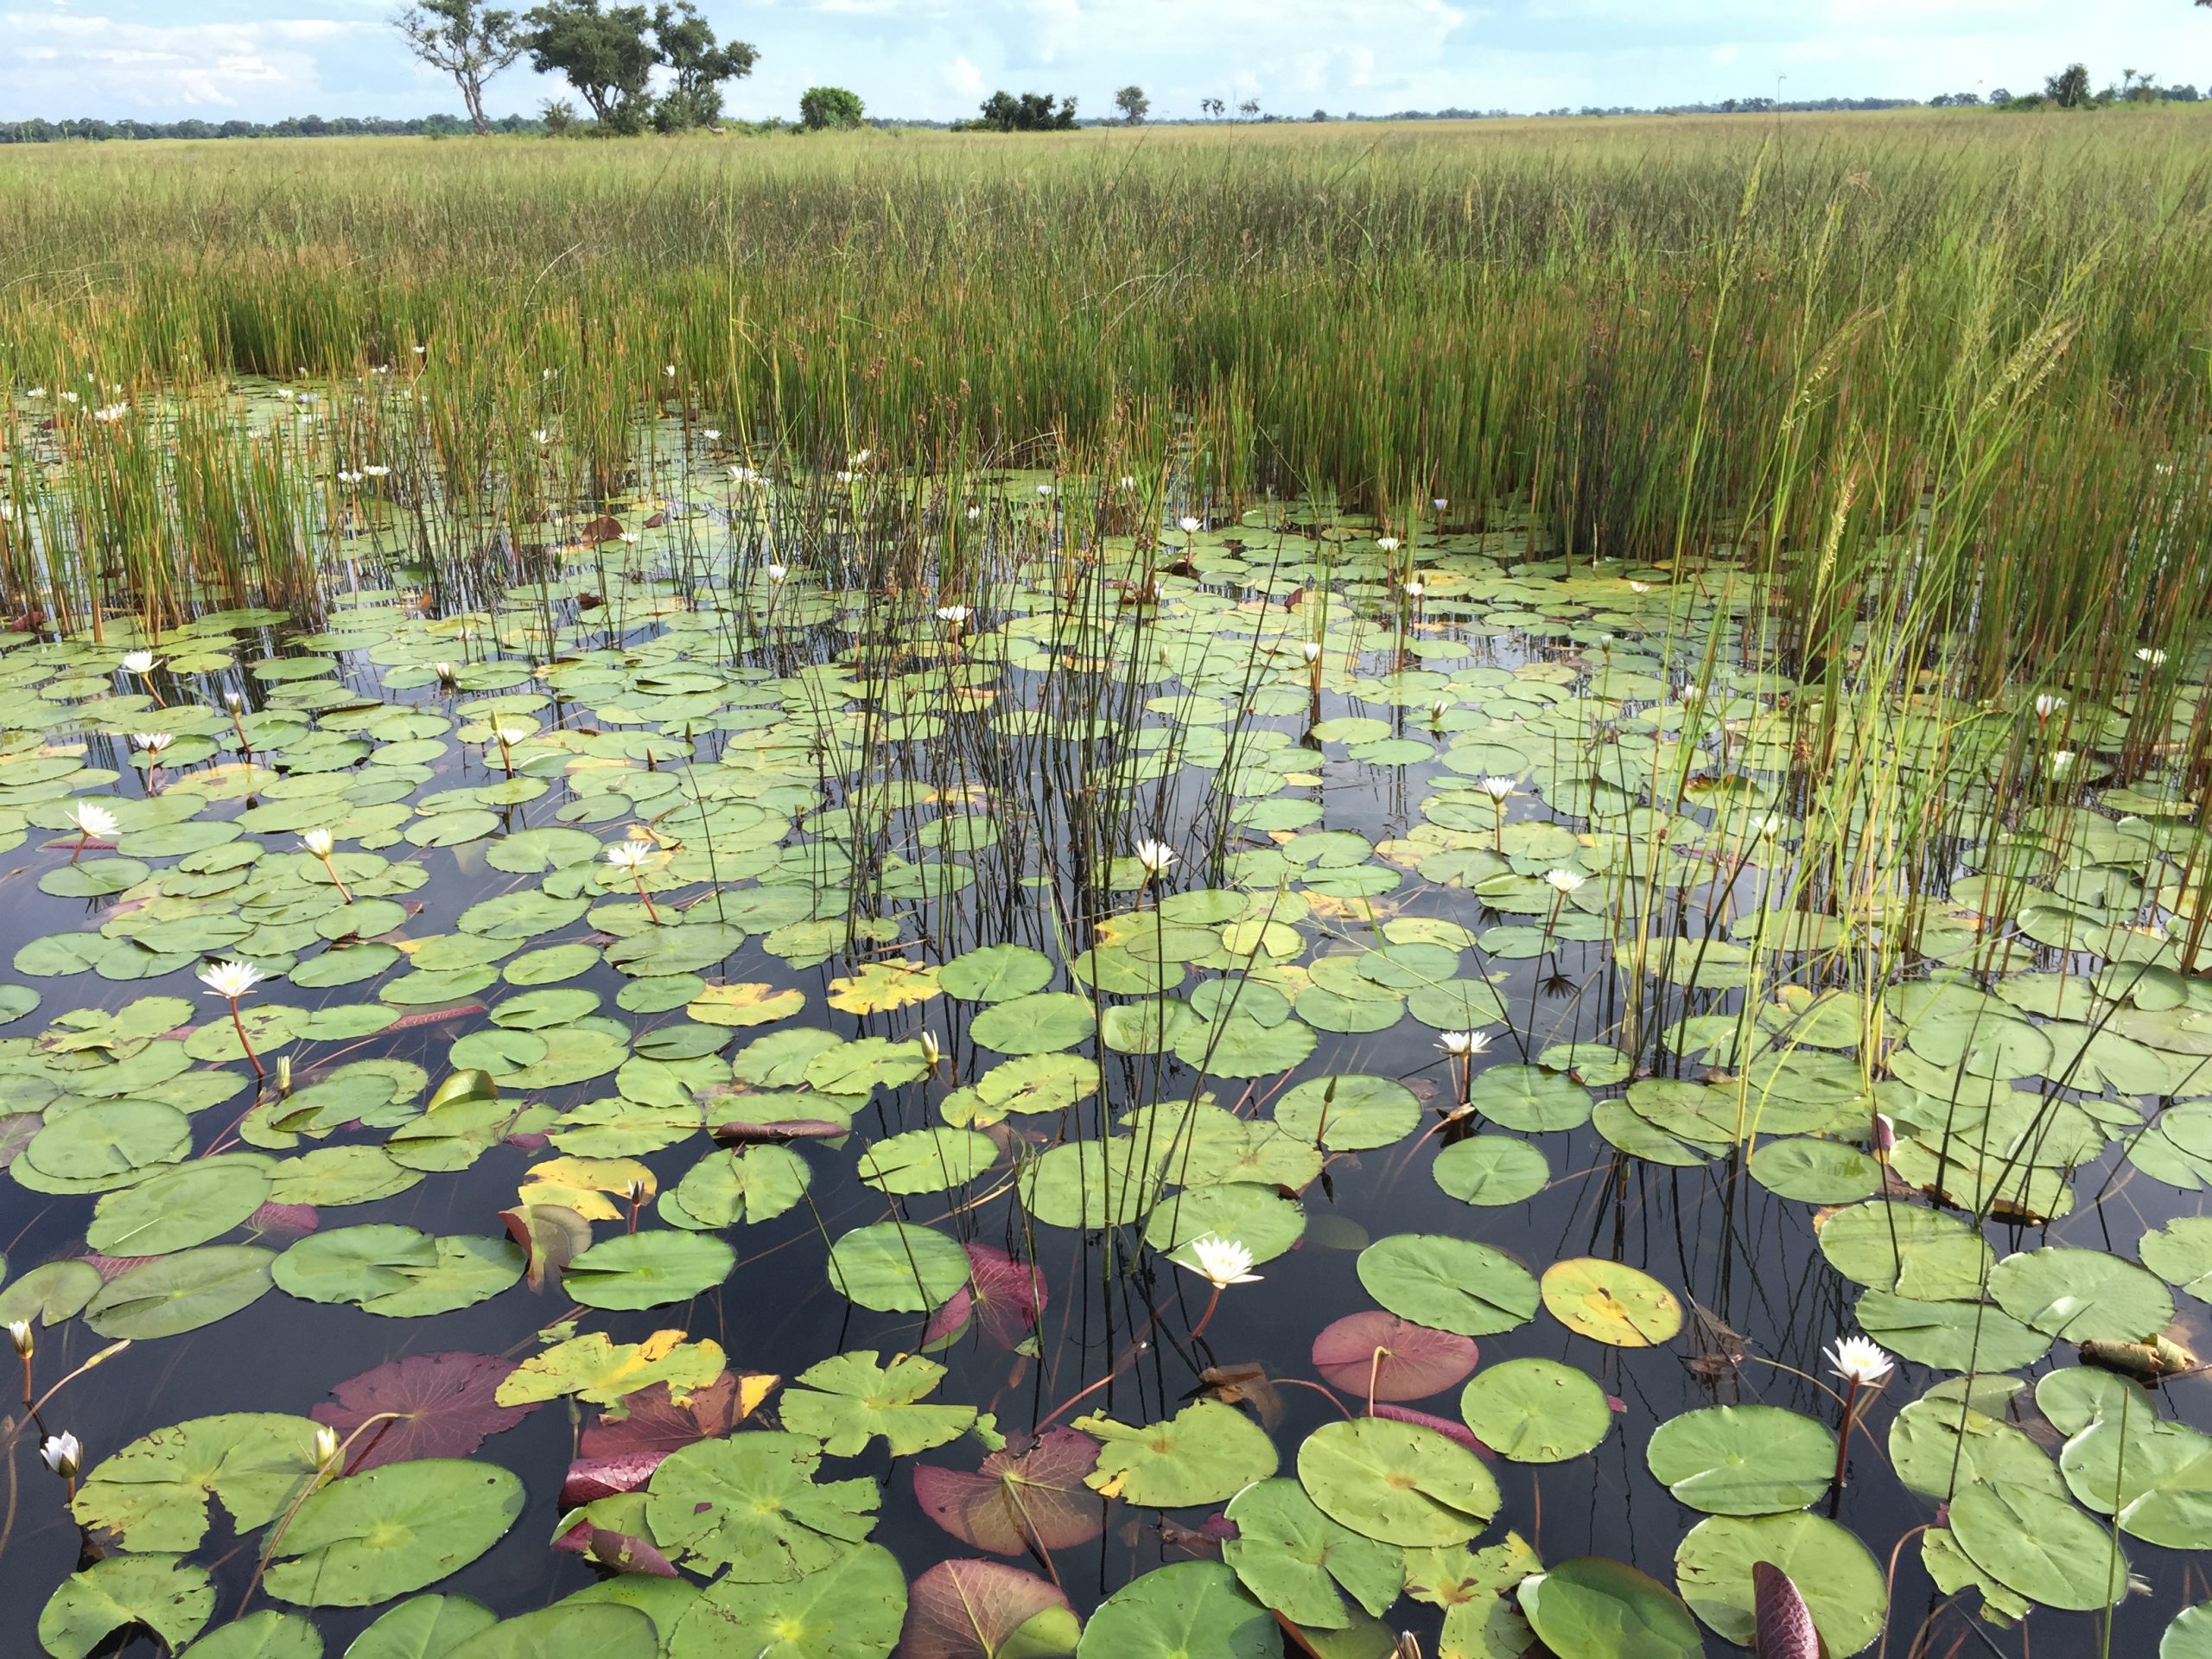 Addressing sub-Saharan Africa’s inadequate sanitation - Lilies in the Okavango basin